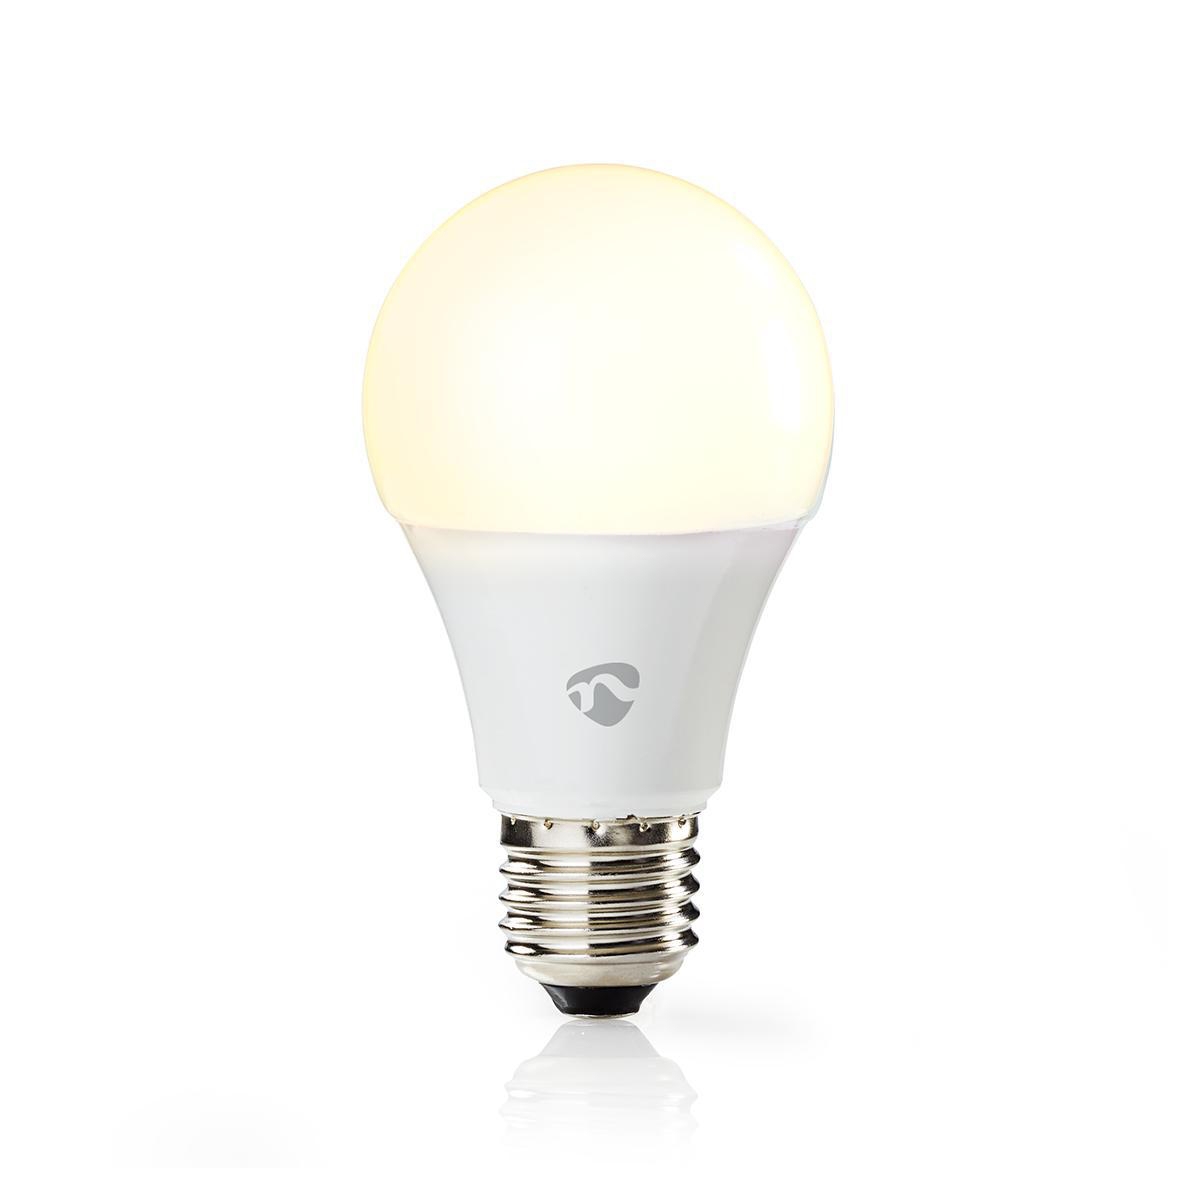 Nedis SmartLife LED Bulb